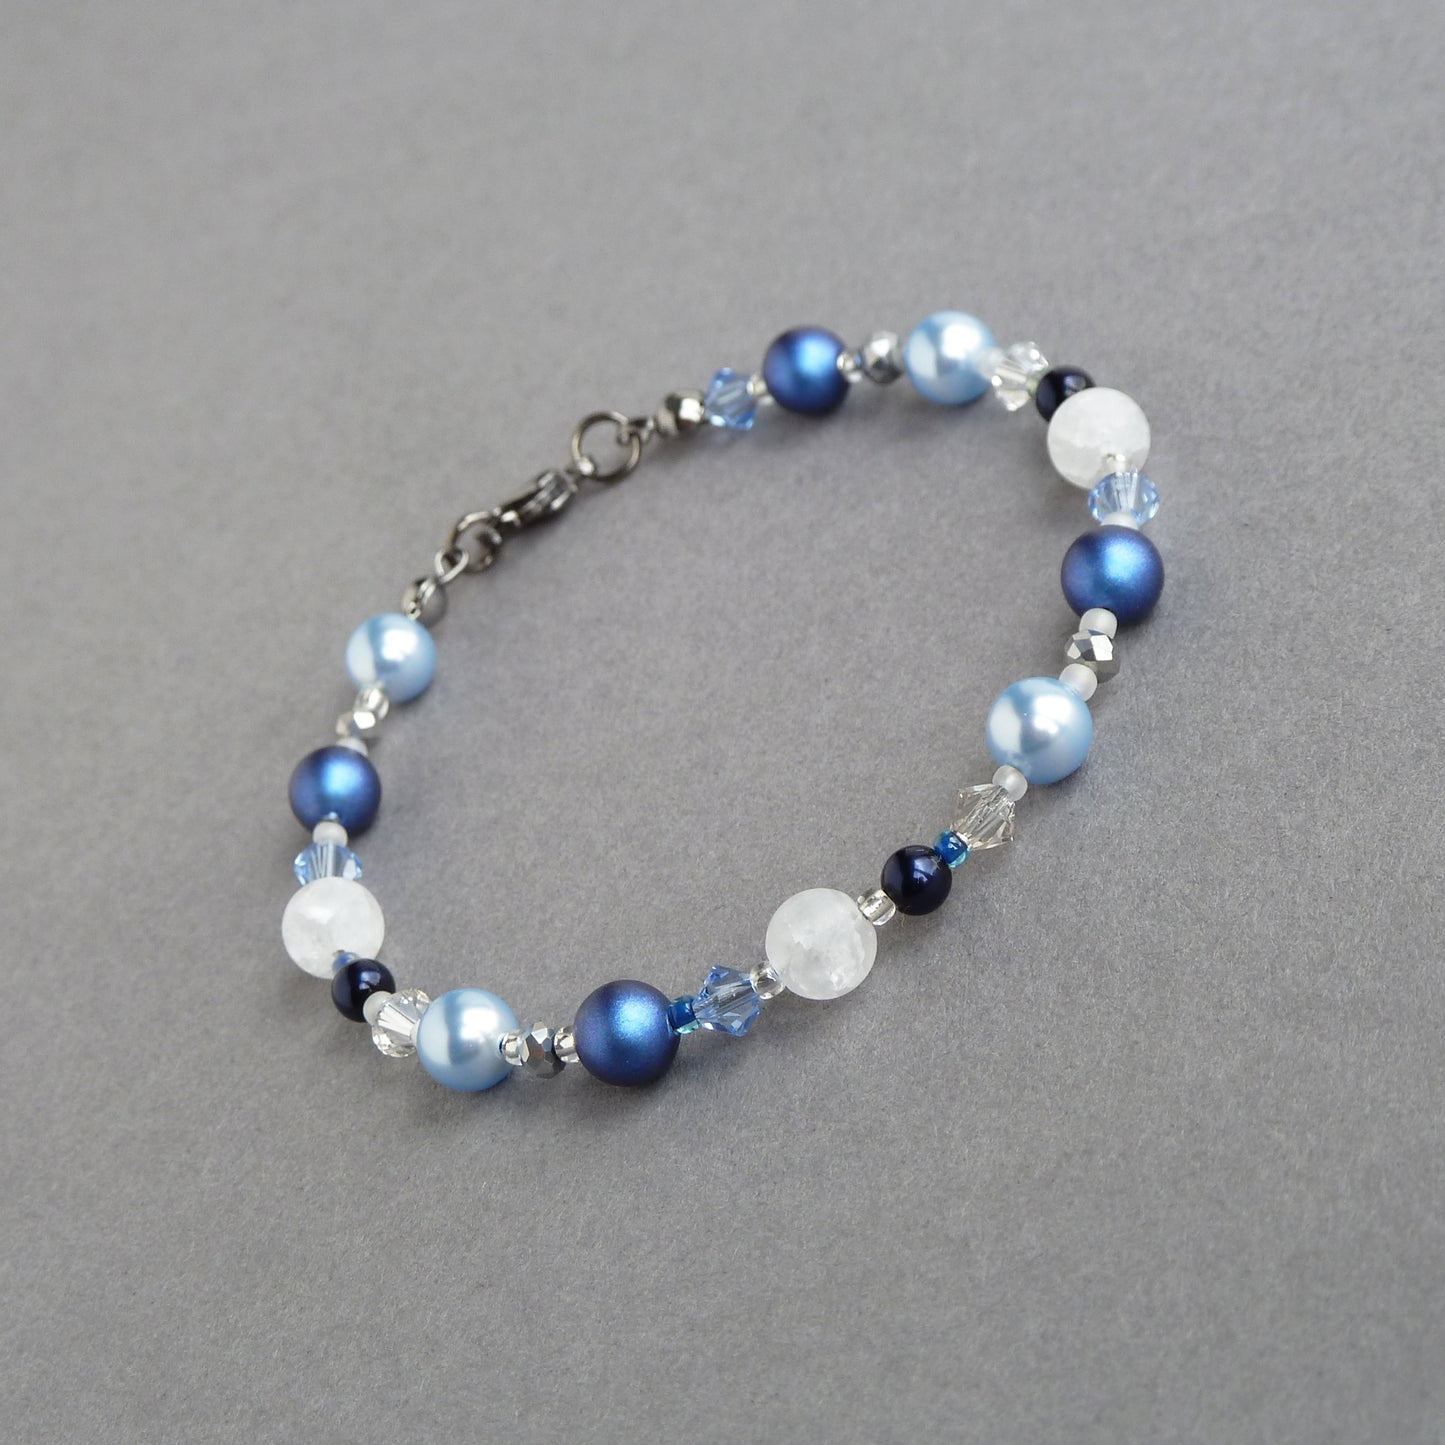 Cornflower blue bracelets